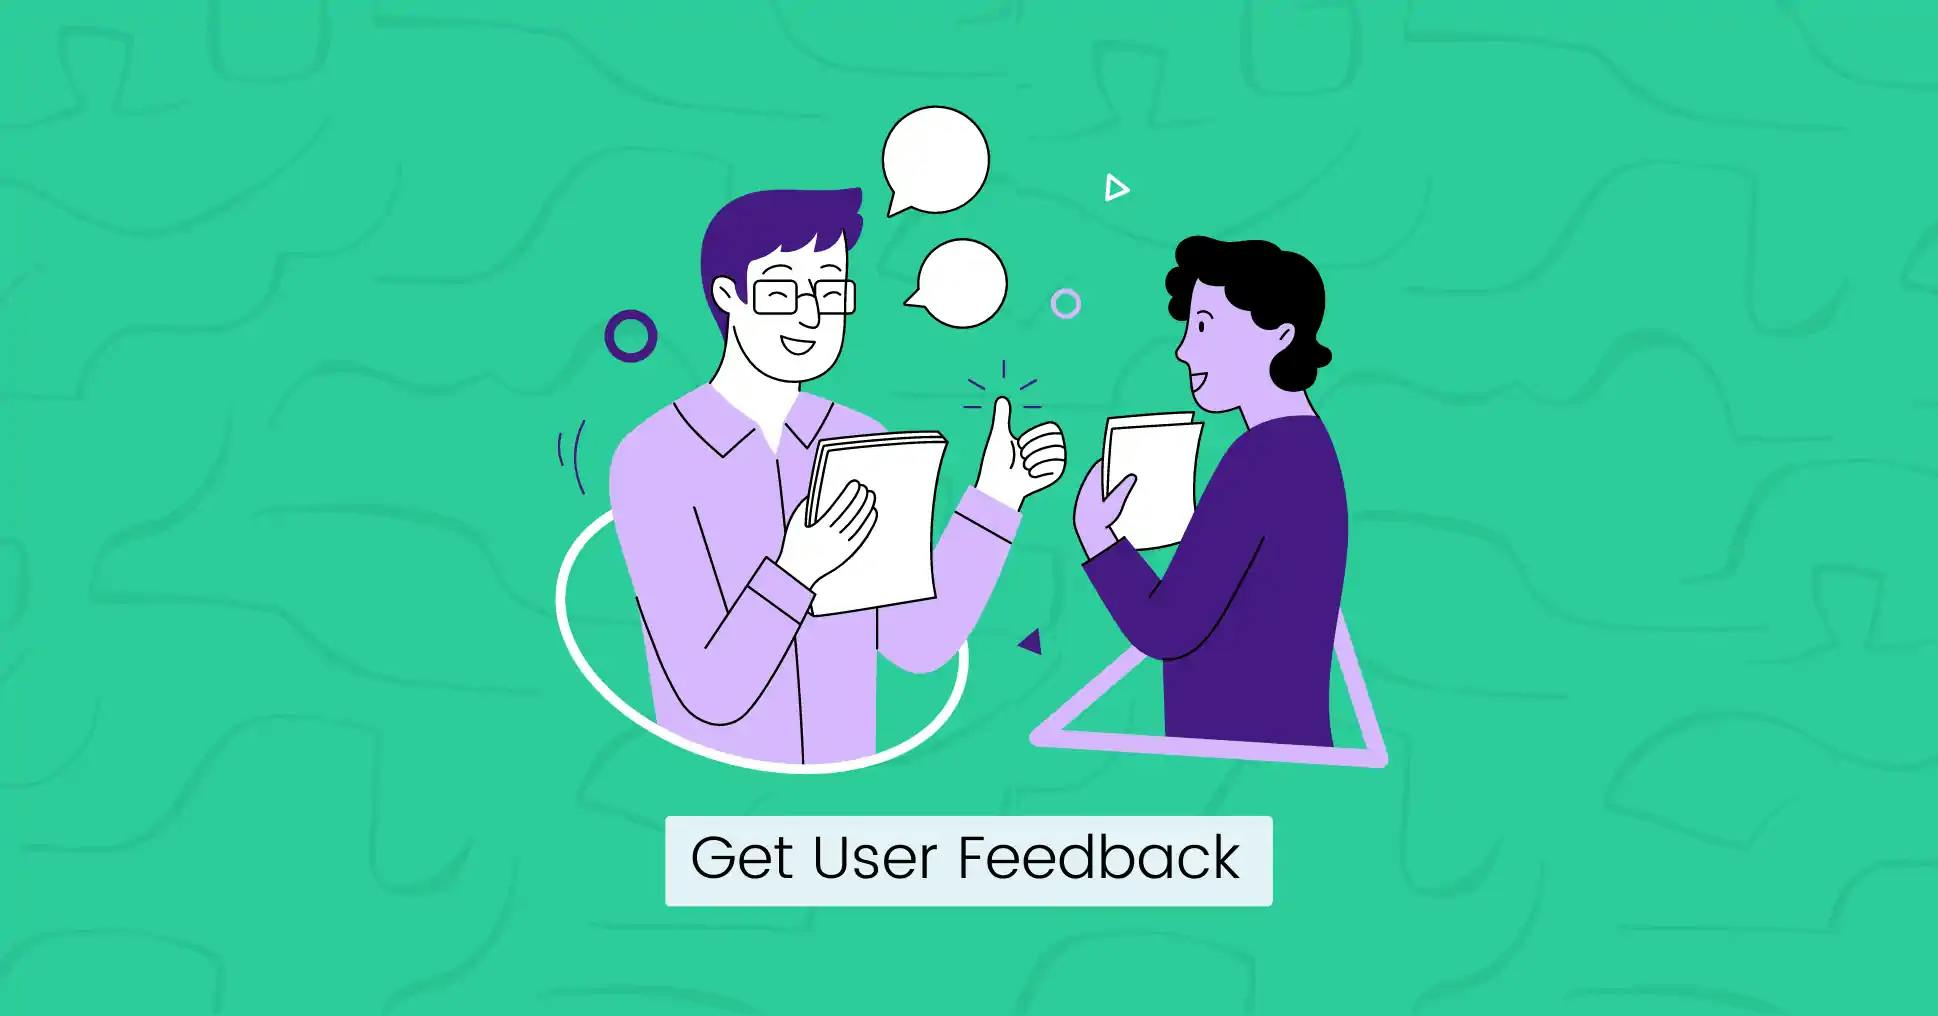 Get user feedback